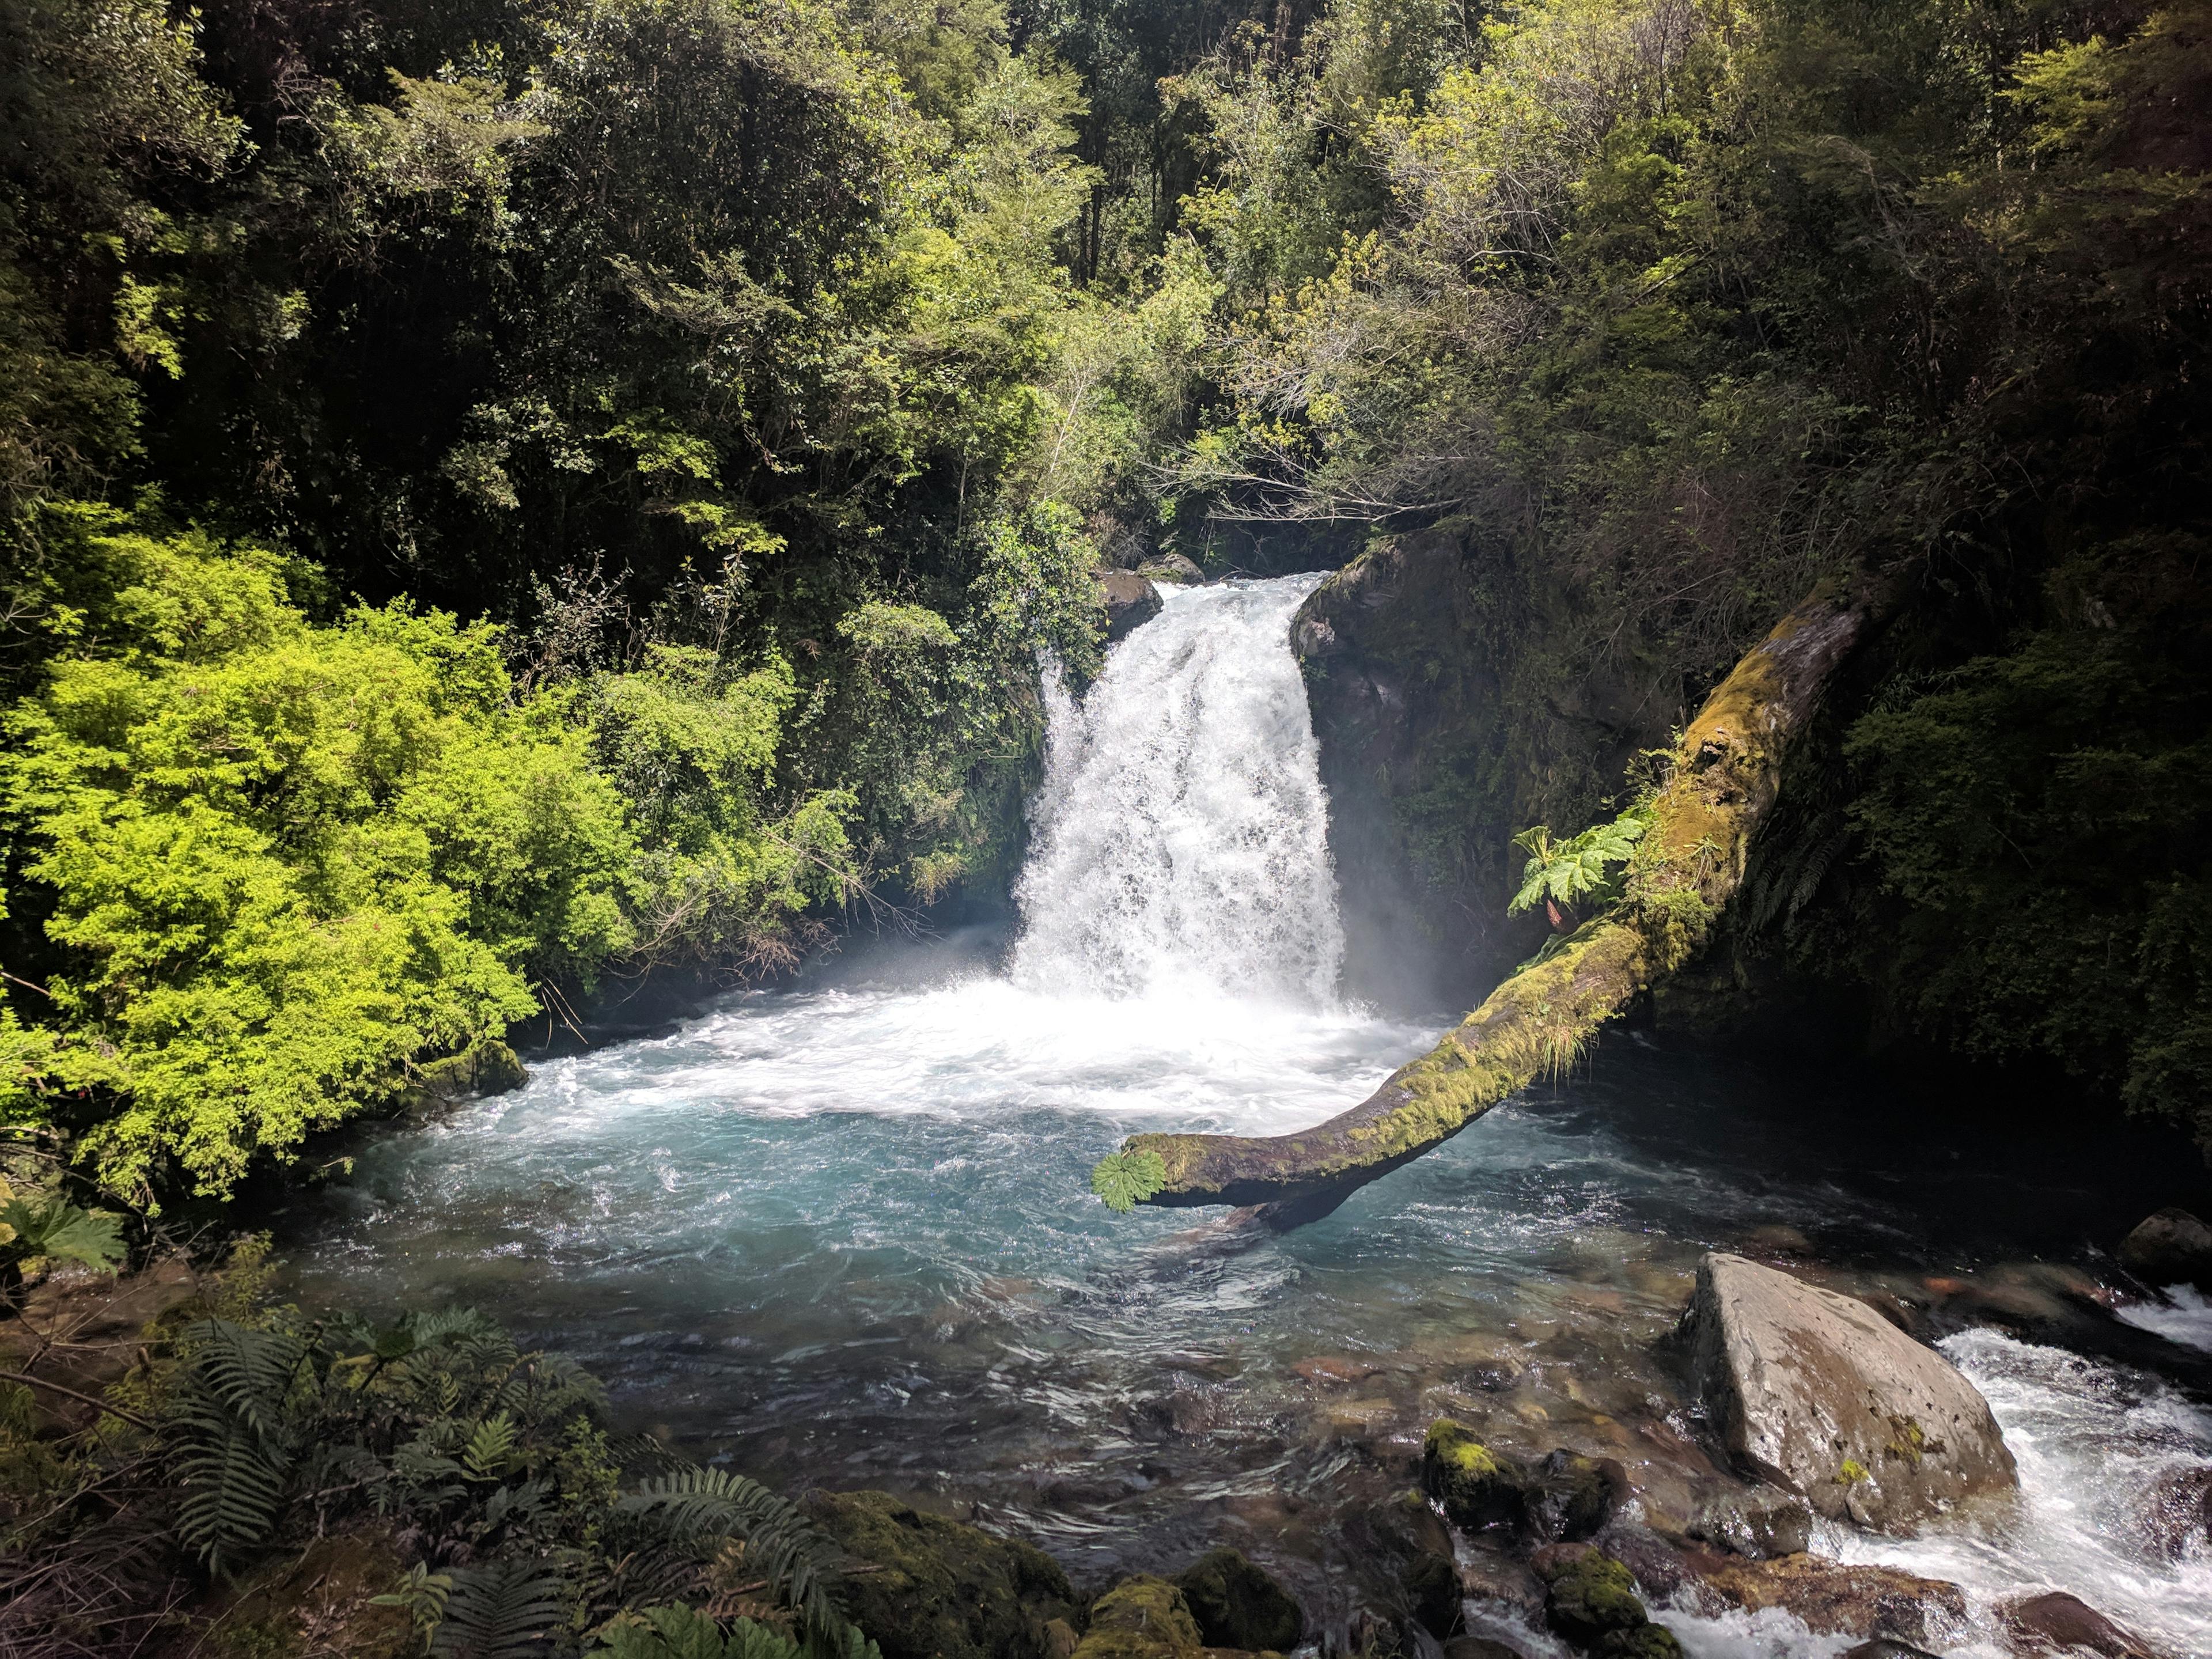 More waterfalls at Parque Nacional Puyehue